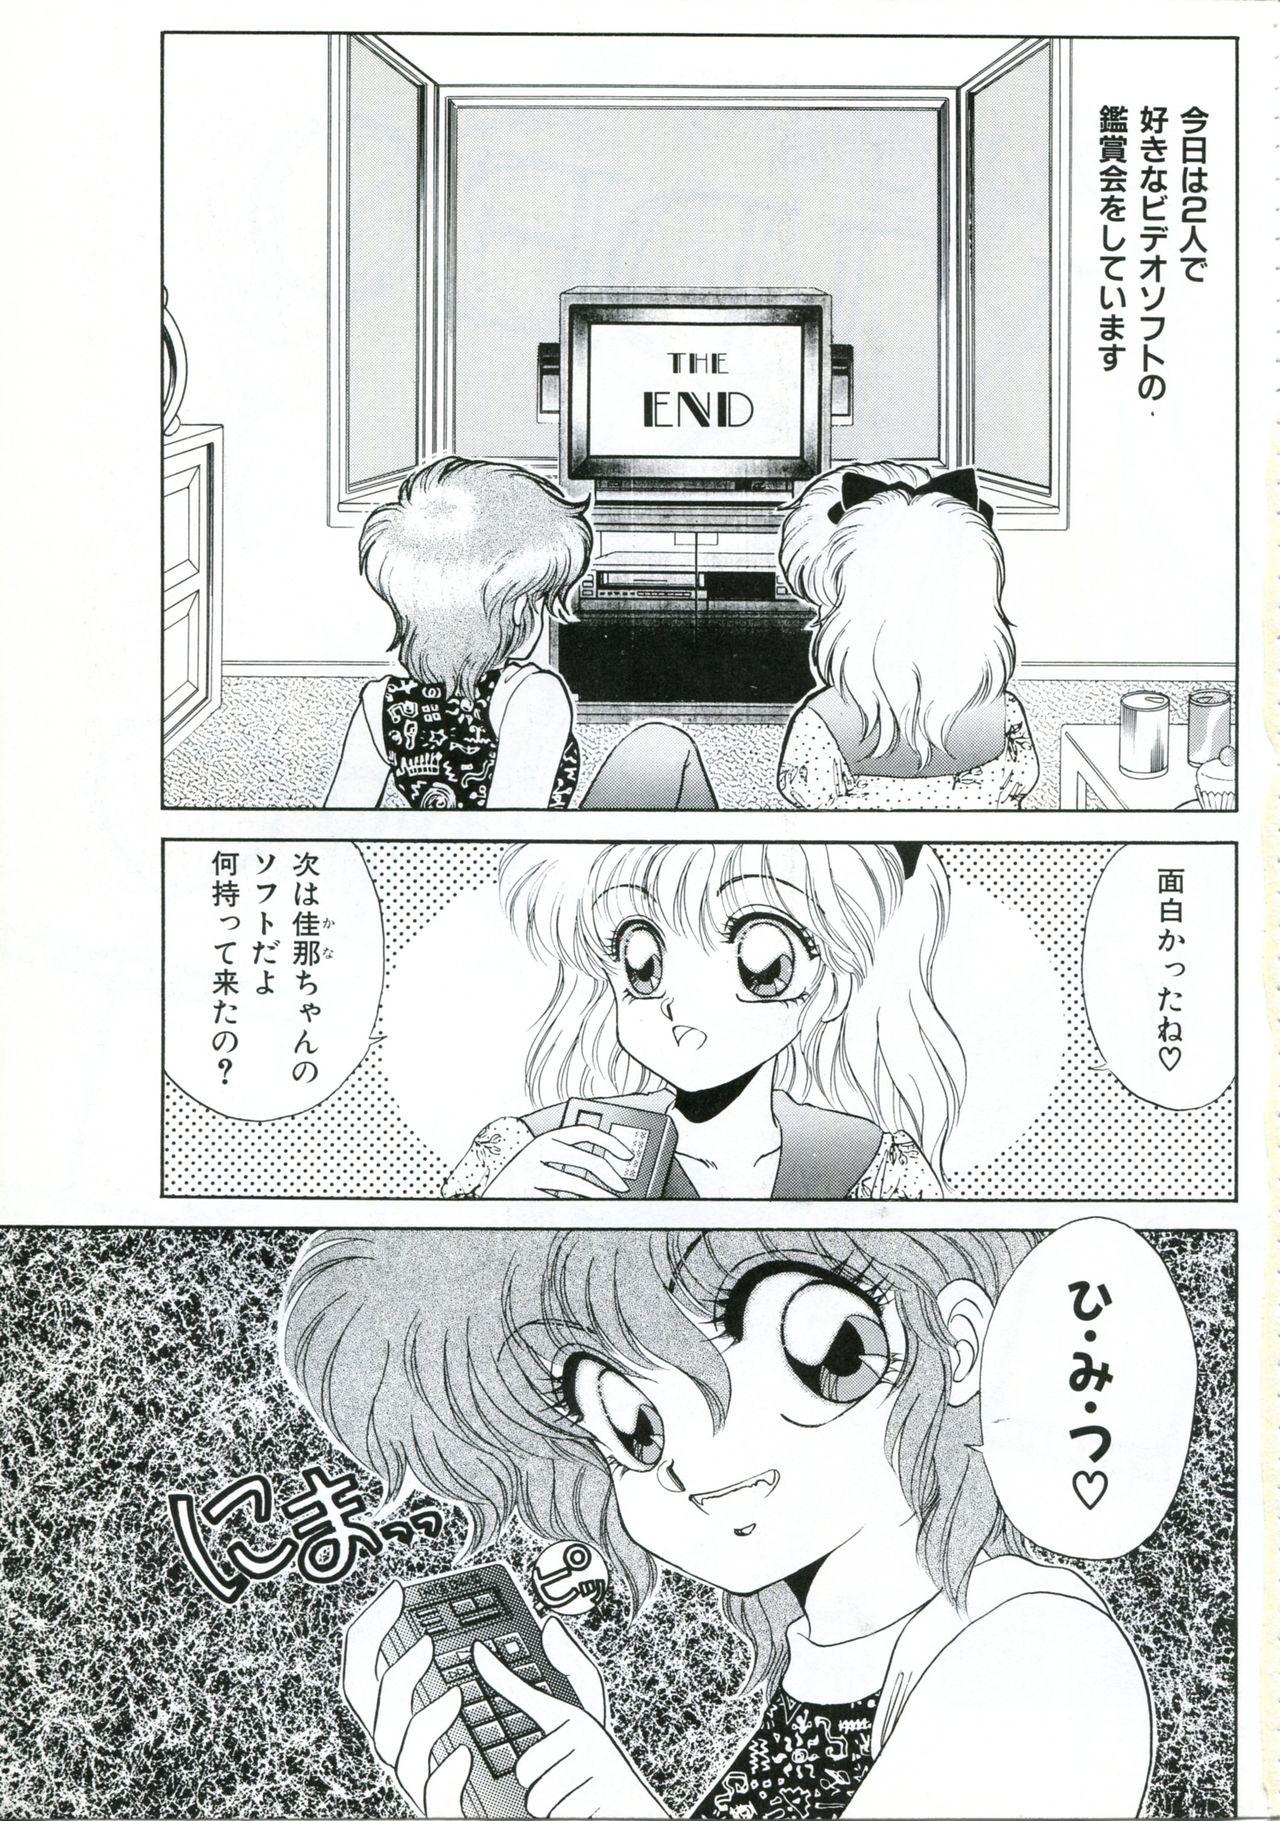 Bishoujo Anime Daizenshuu - Adult Animation Video Catalog 1991 100